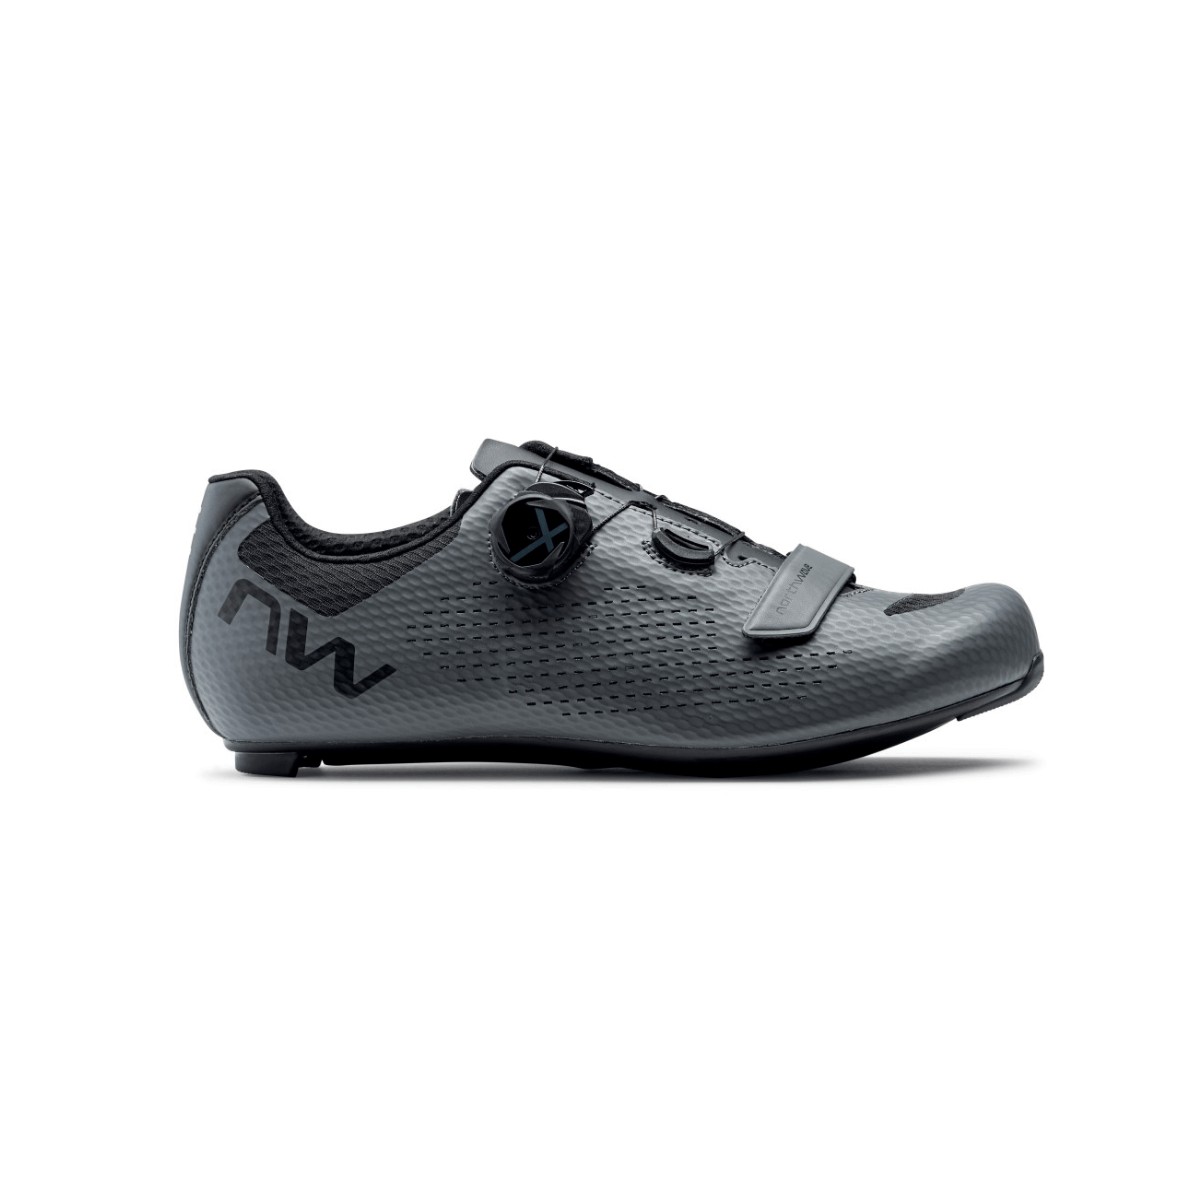 Chaussures Northwave Storm Carbon 2 Gris, Taille 42 - EUR